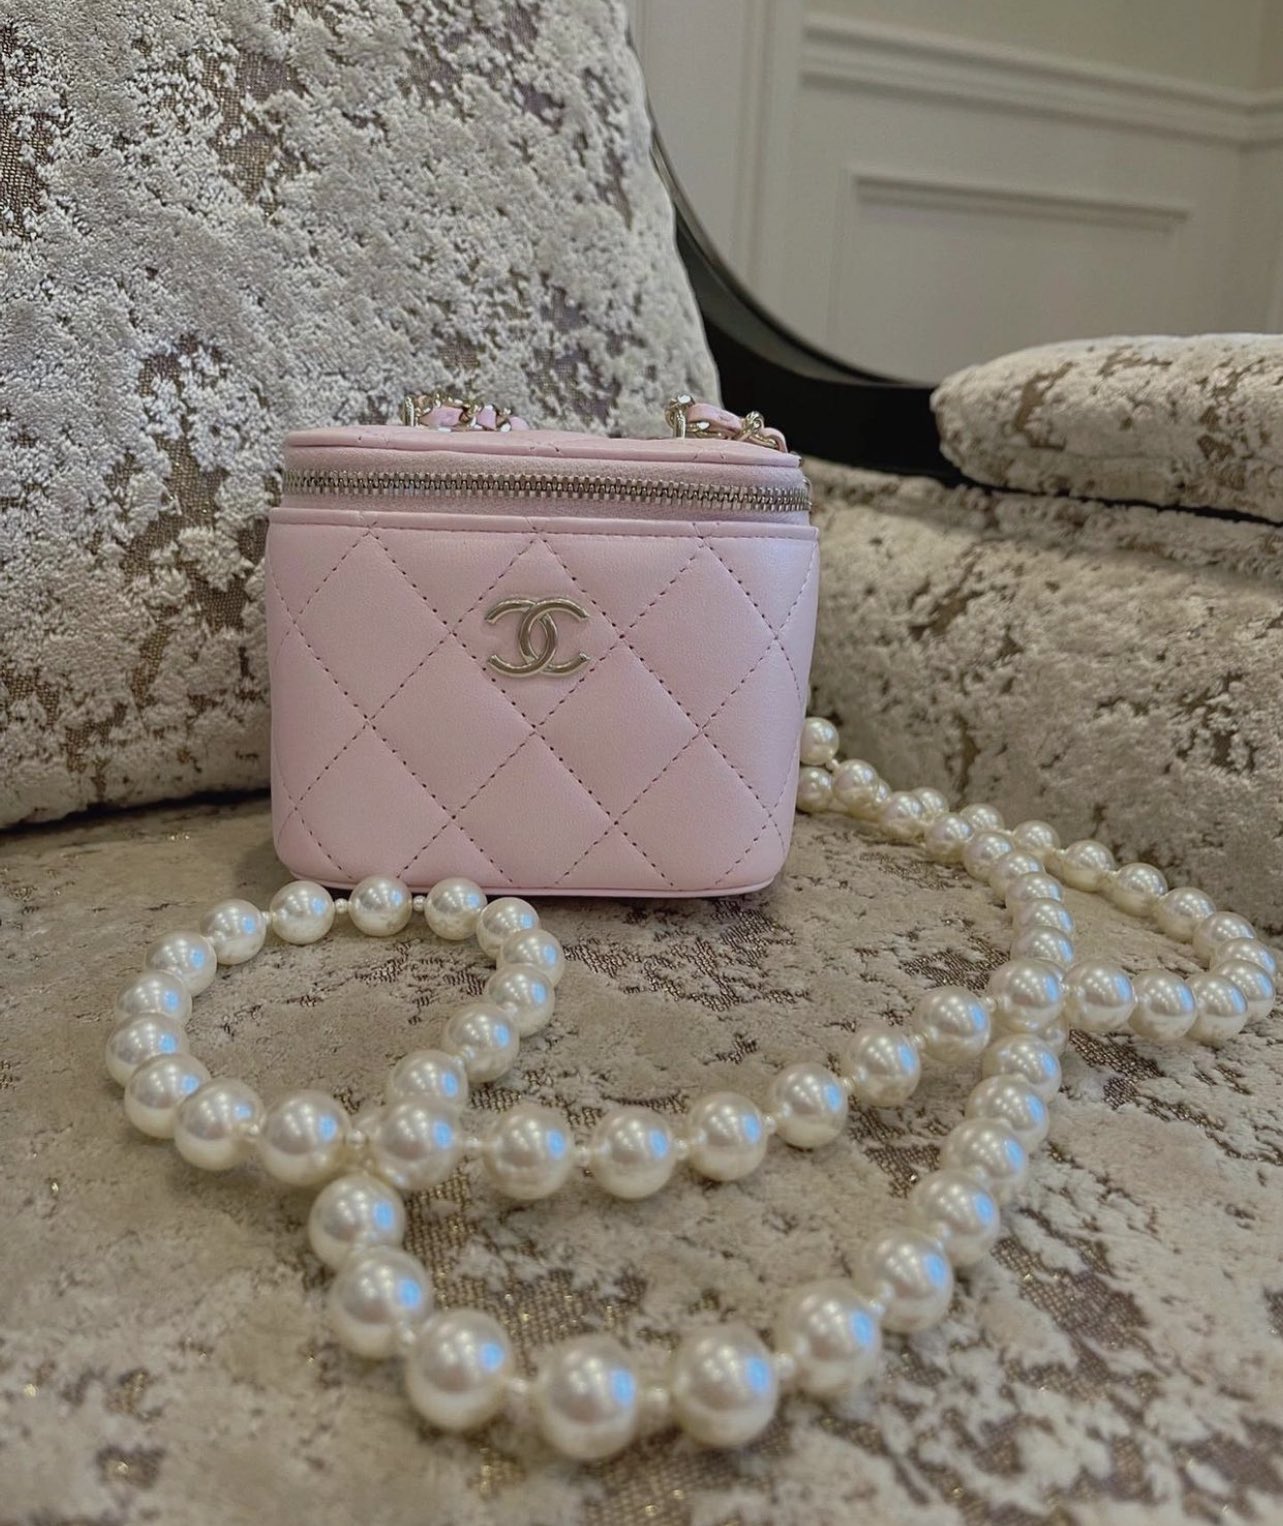 𓃭 on X: Chanel vanity pearl bag  / X